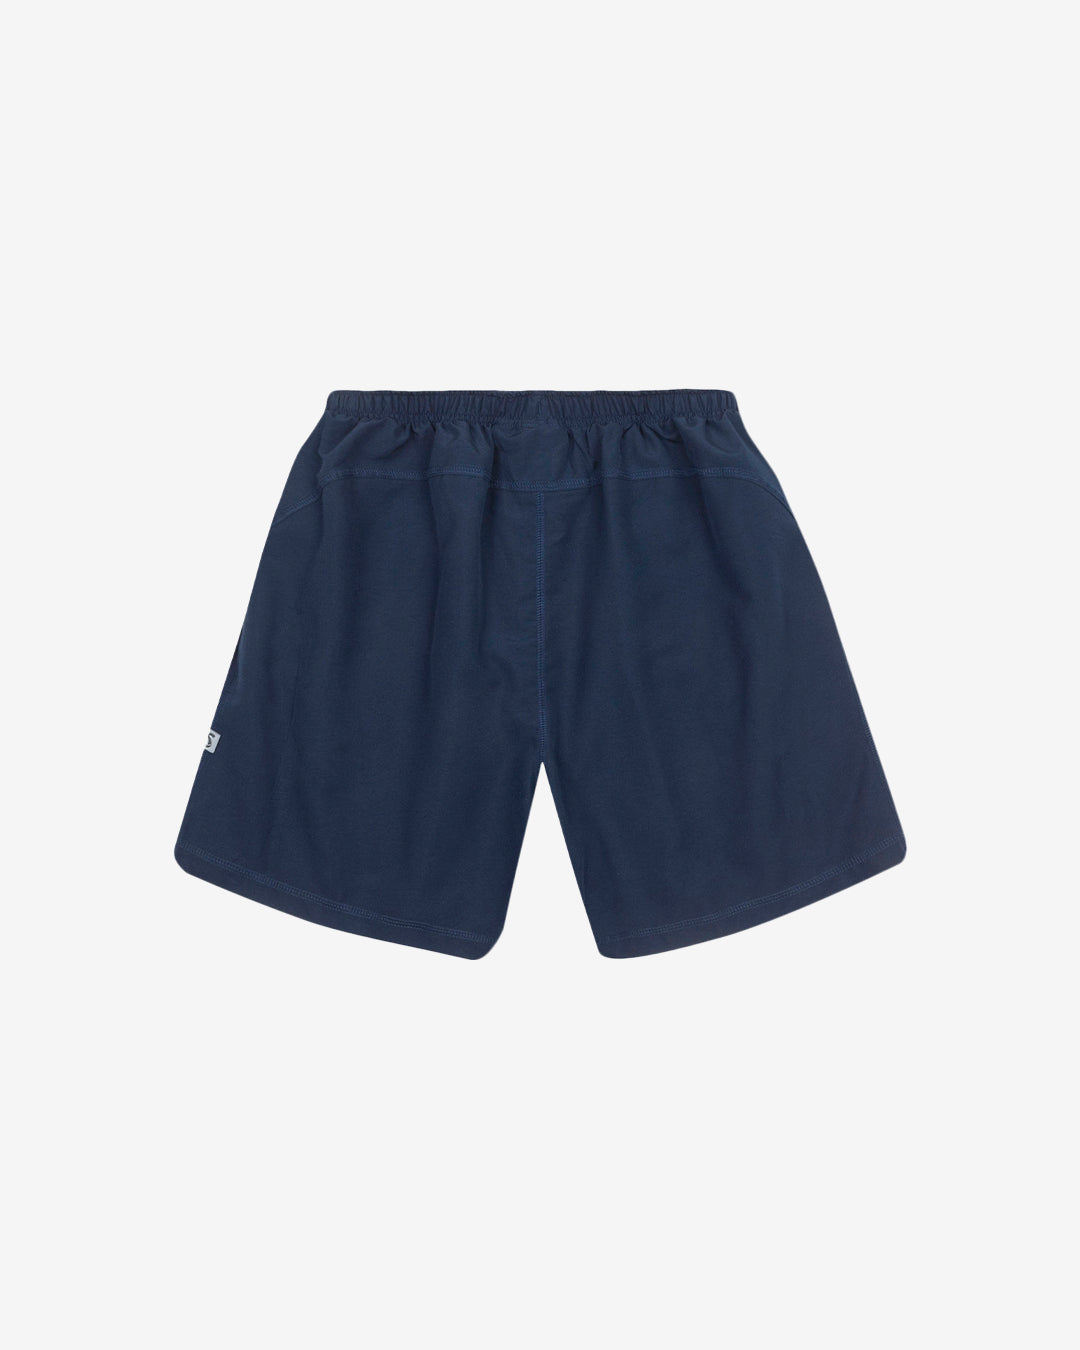 Hc: 9606 - Clipper Shorts - Navy